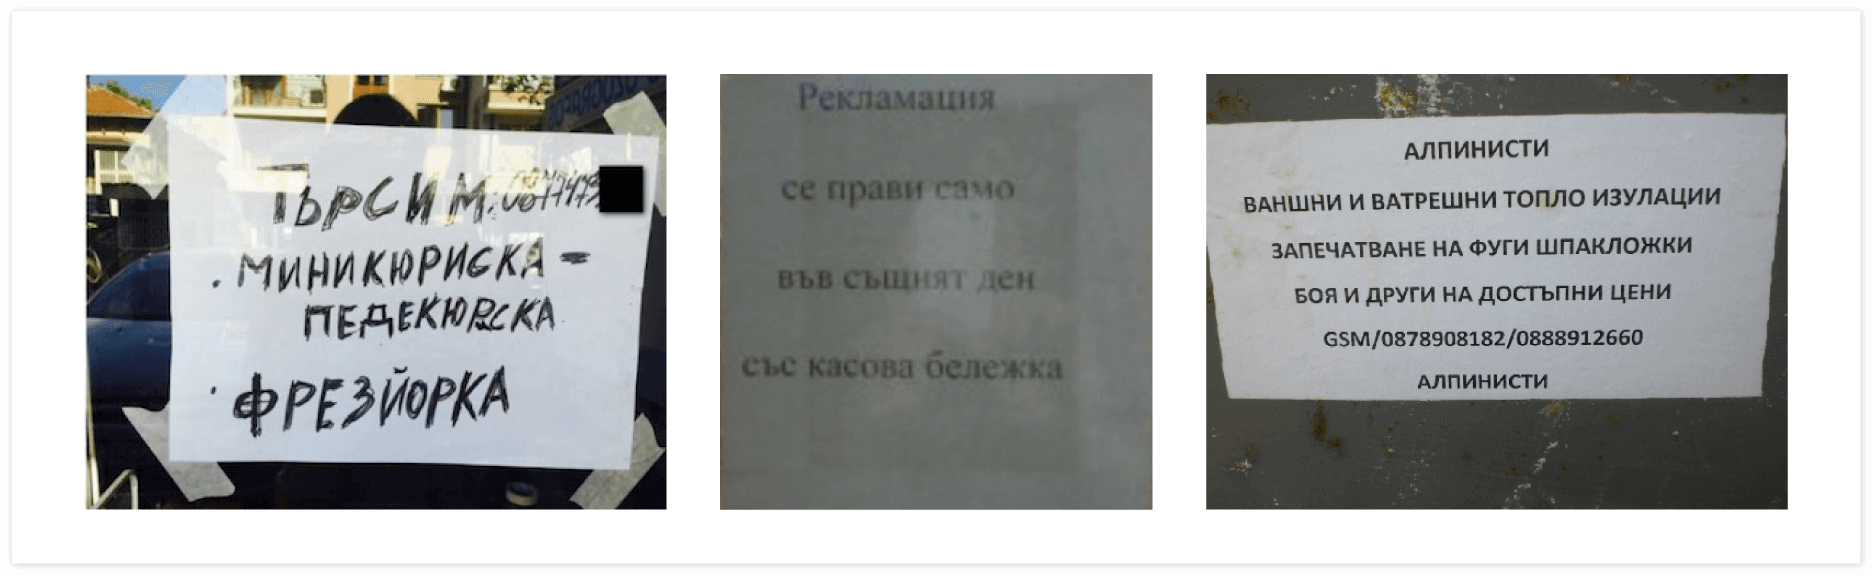 Български език и литература, 3. клас - учебна дейност 6